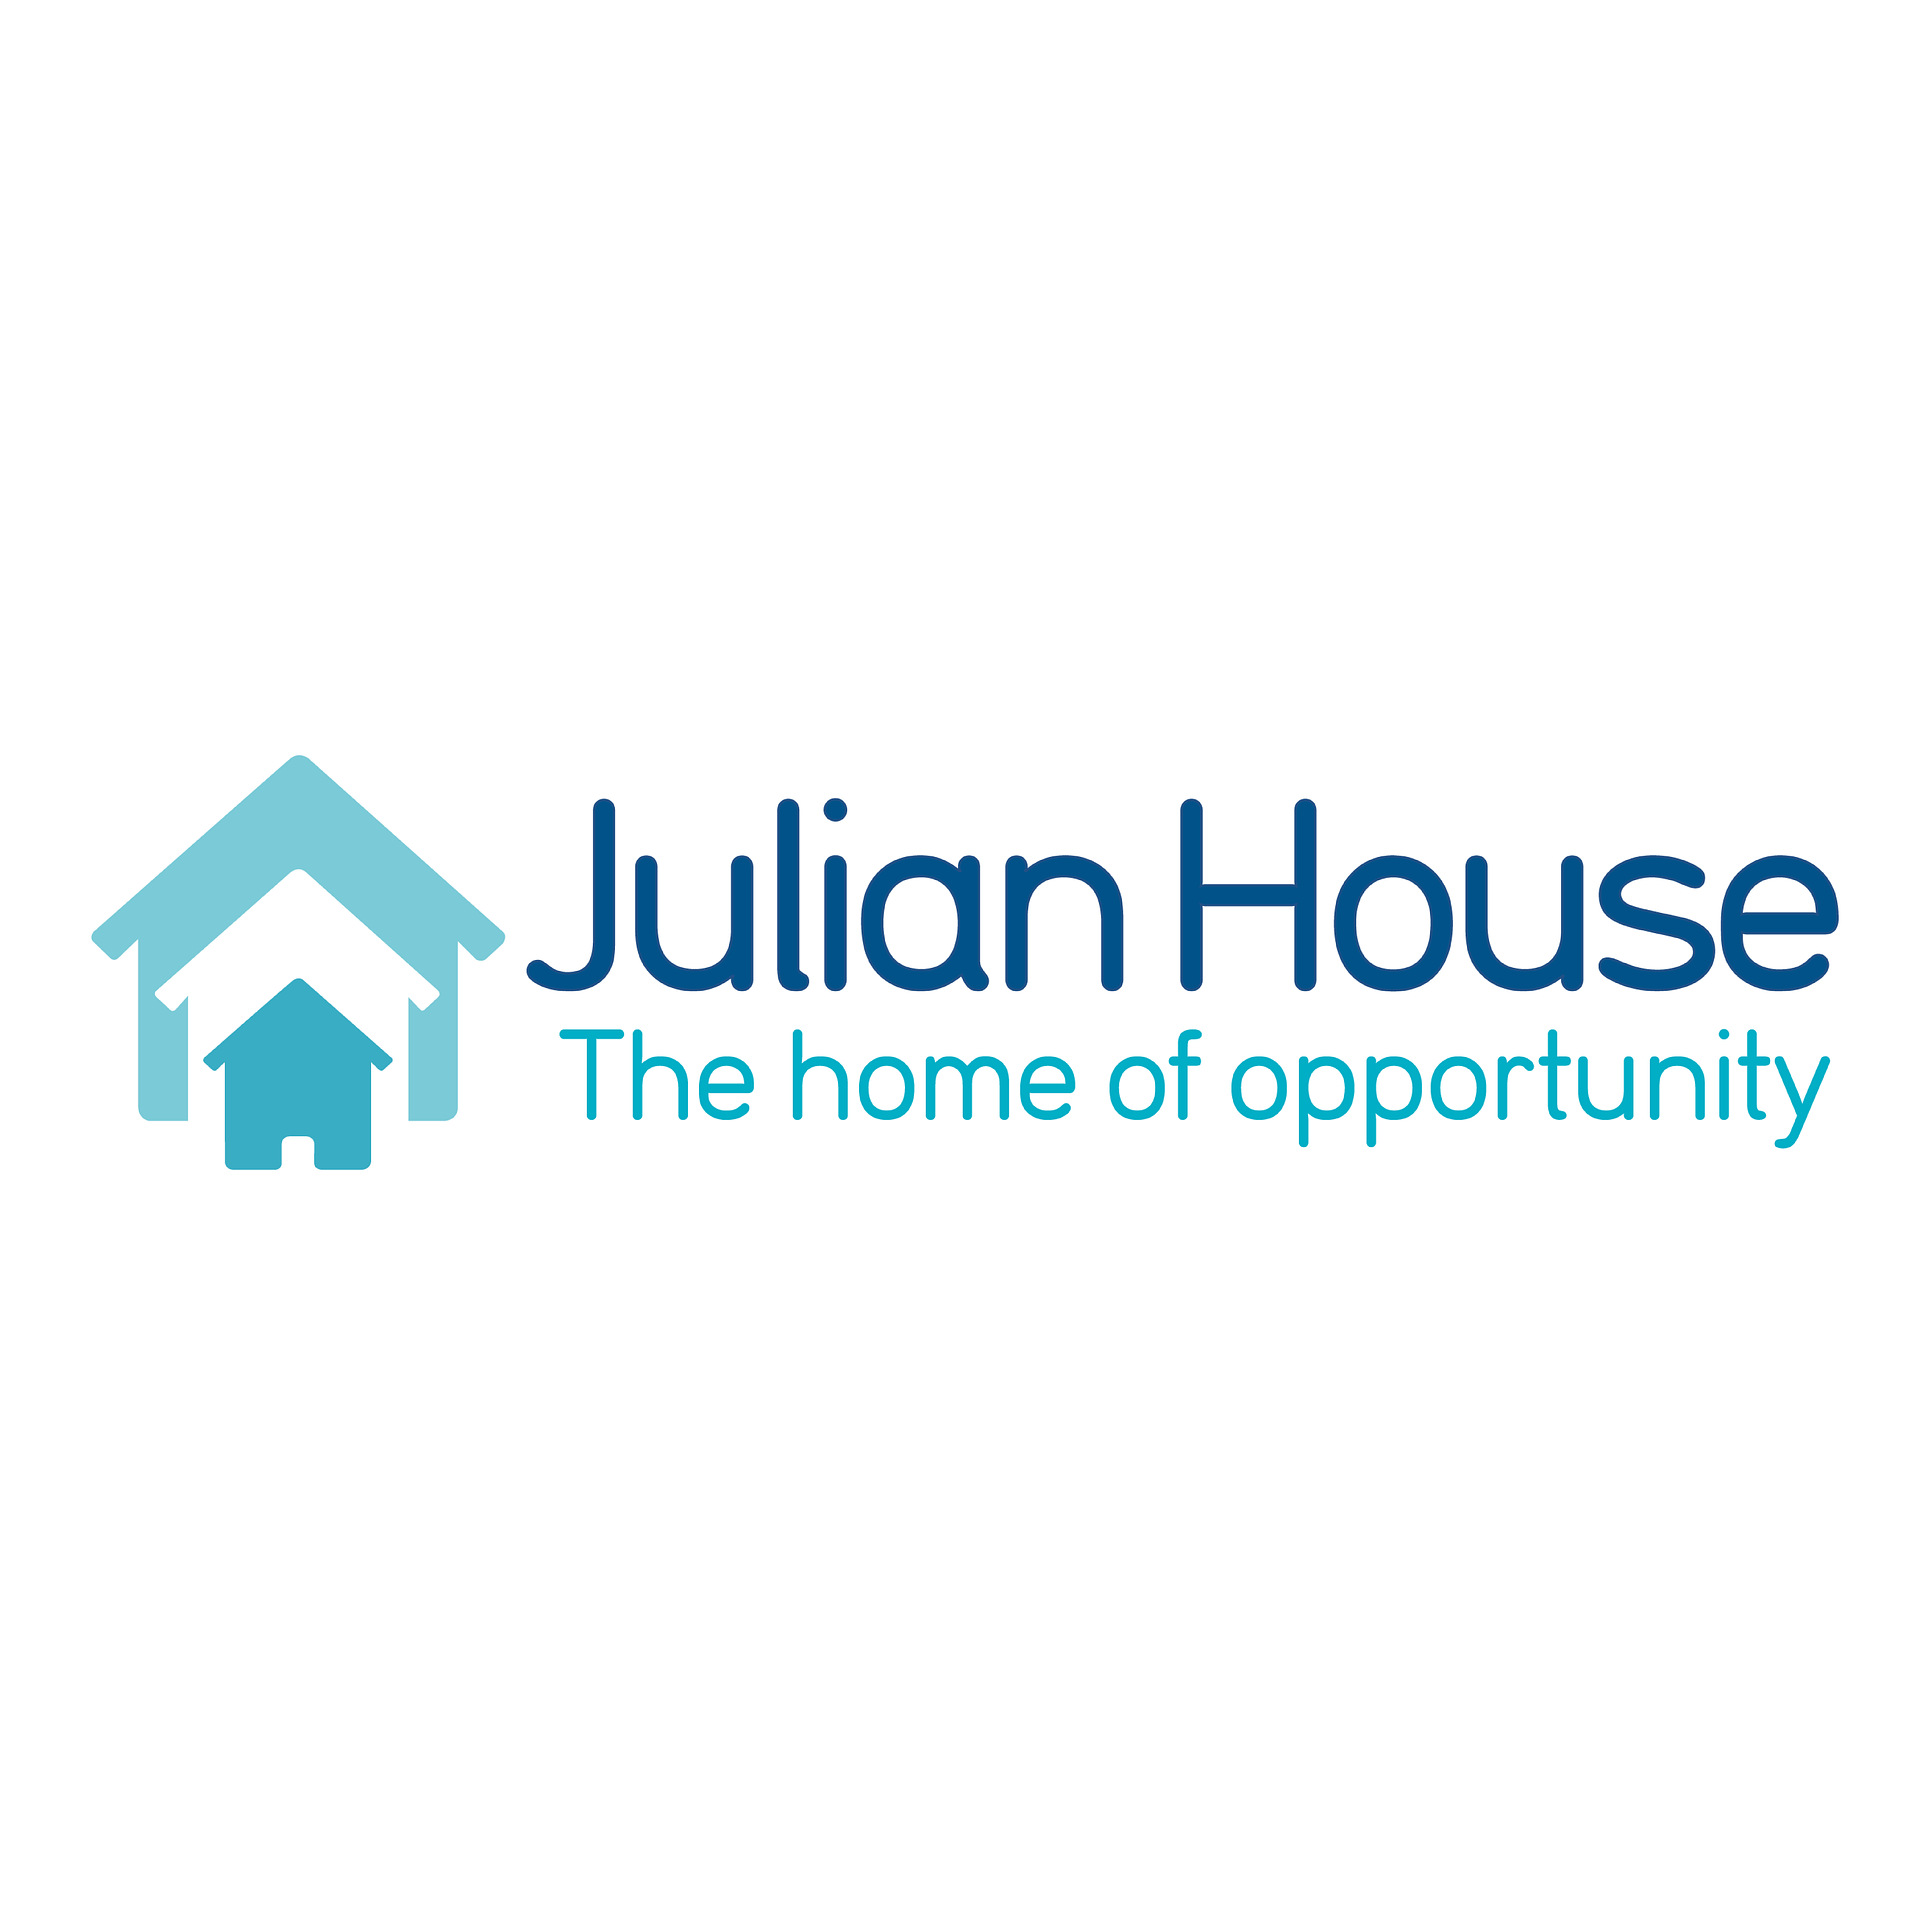 Julian House